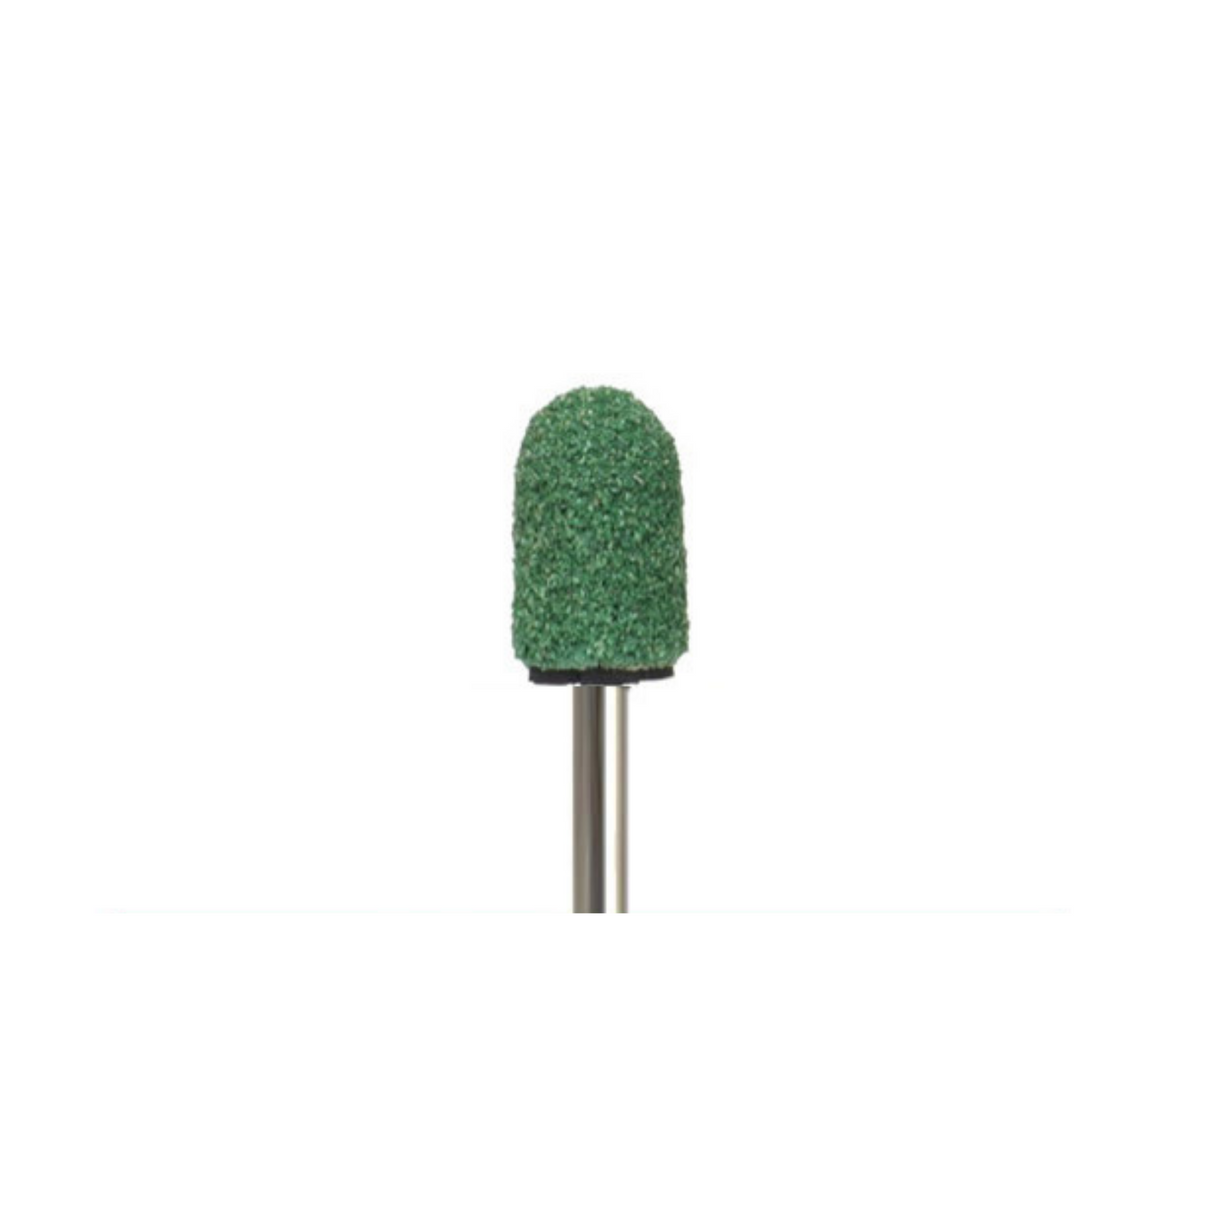 Pedice abrasives Very coarse, Green 10mm | 10/20 pcs